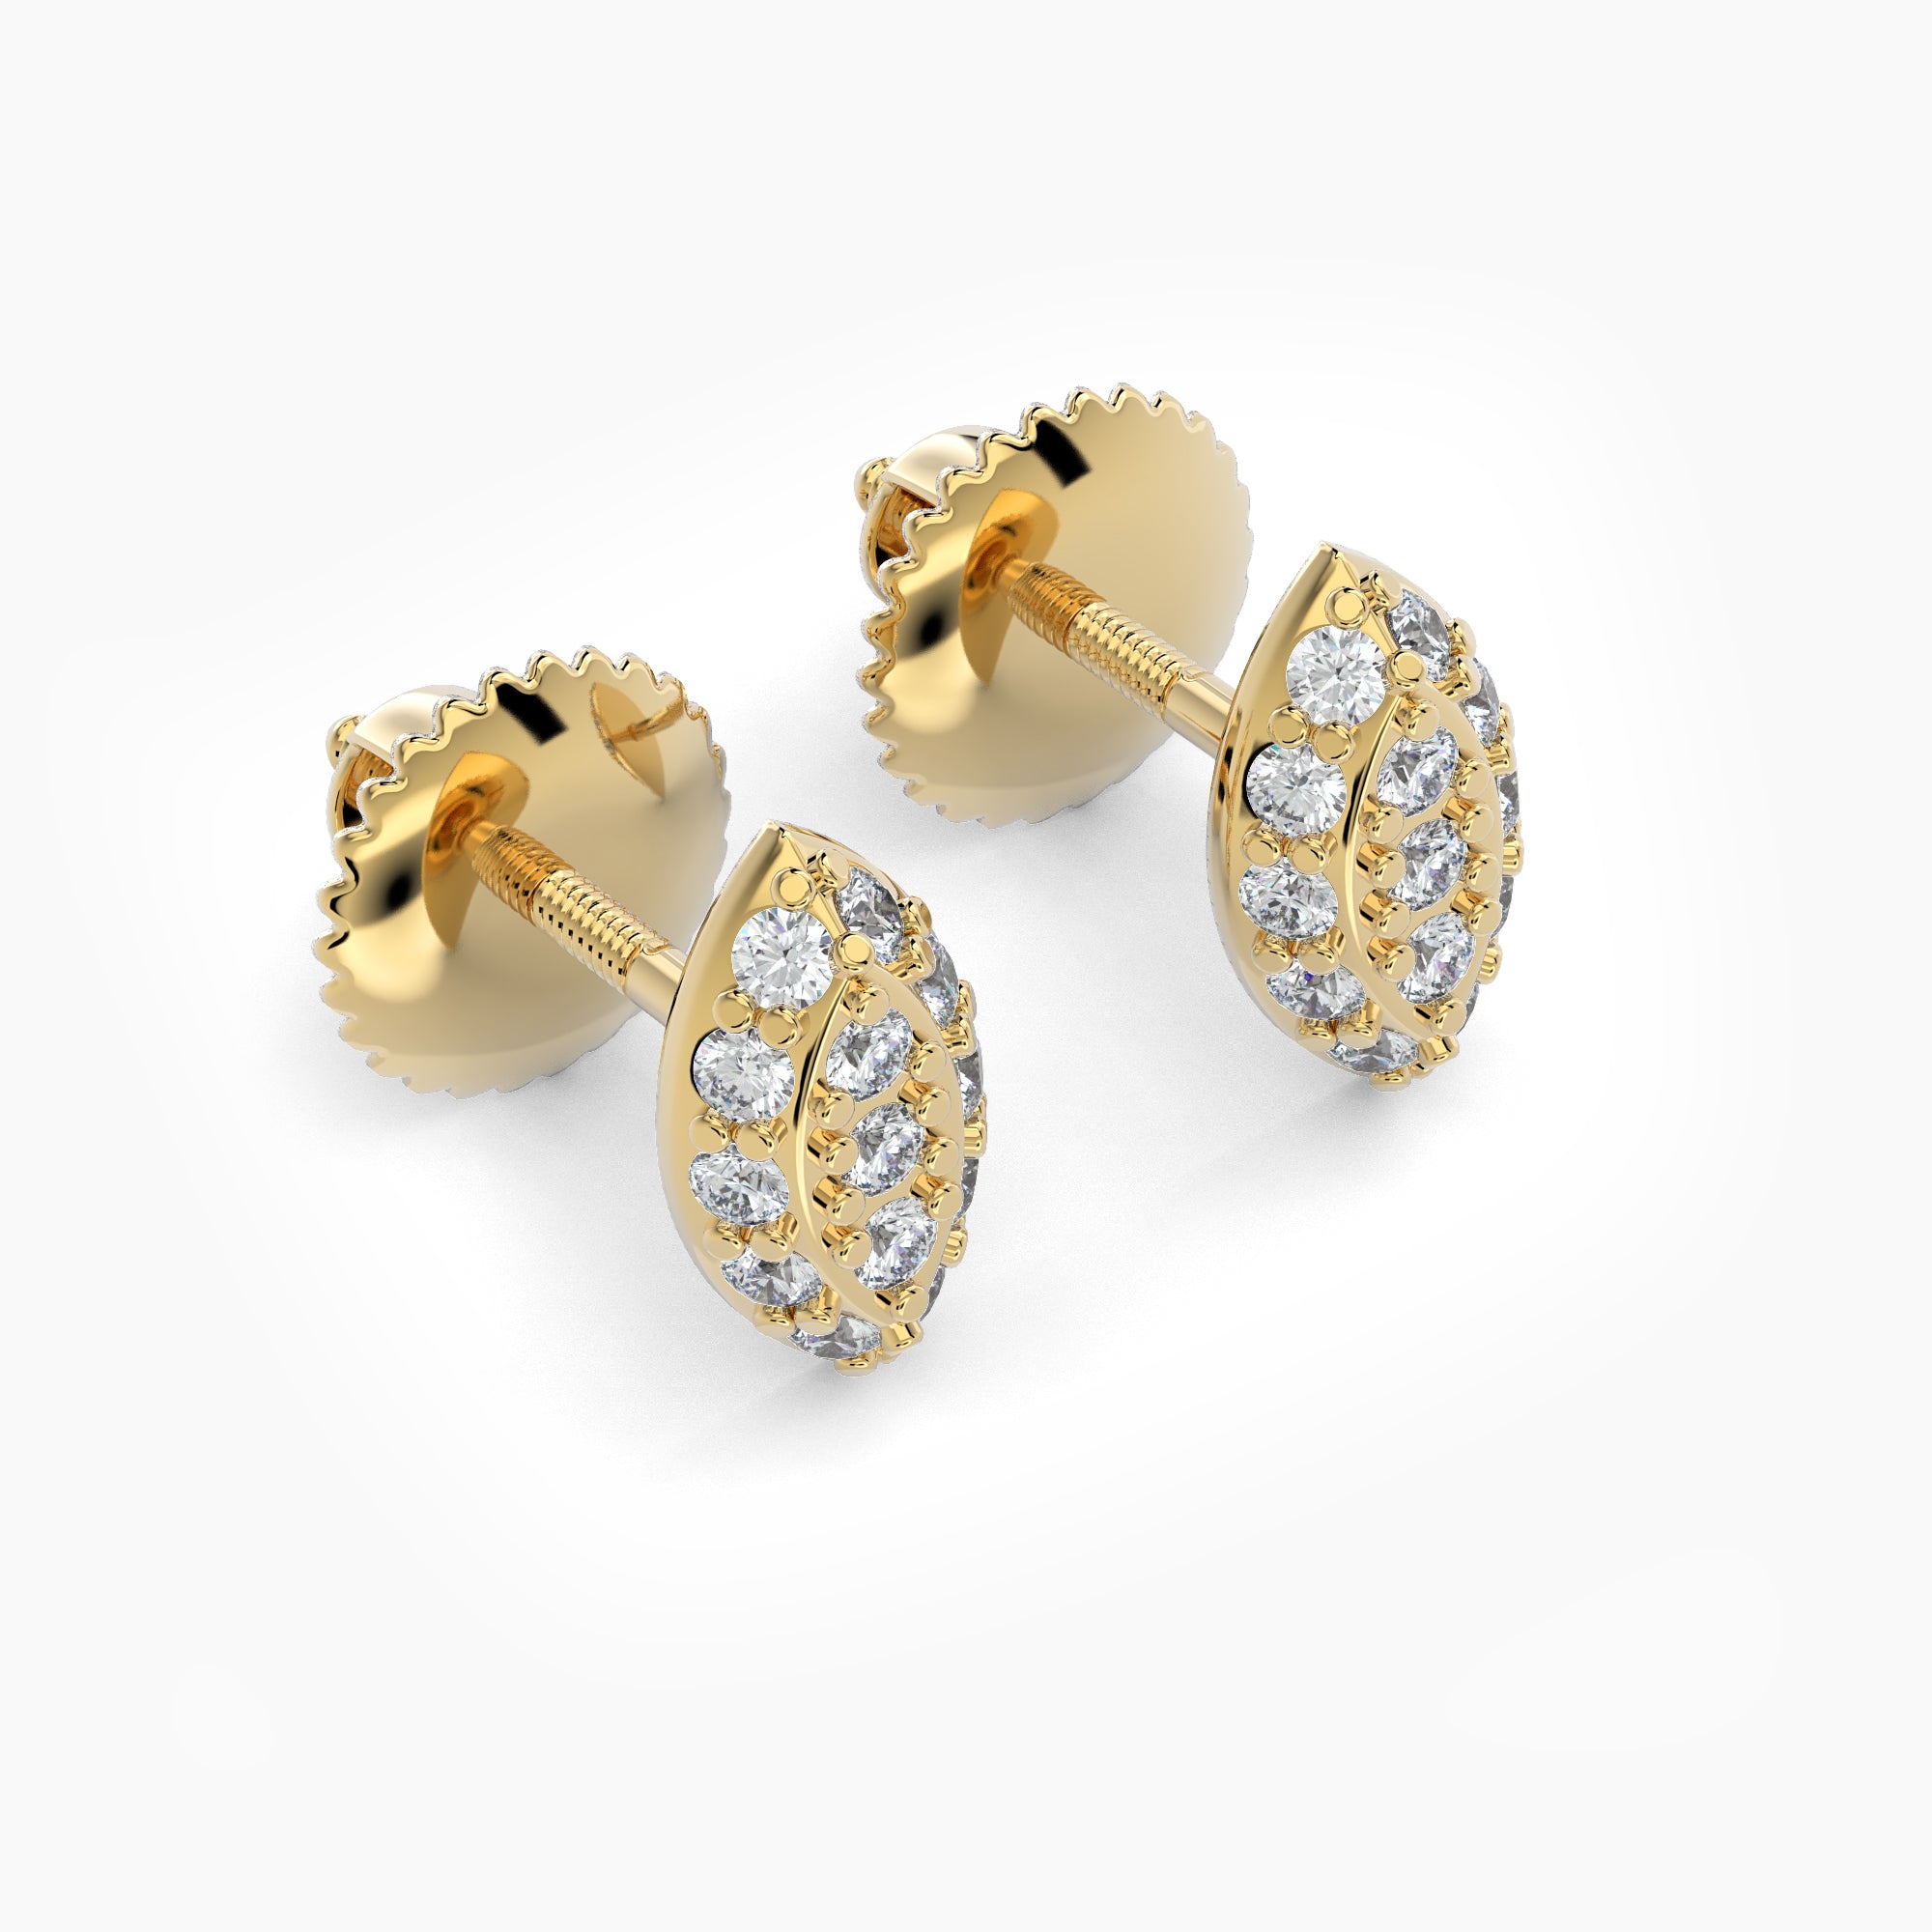 Marquise Shaped AMoré Pavé Stud Earrings With 0.20 ct. Diamonds